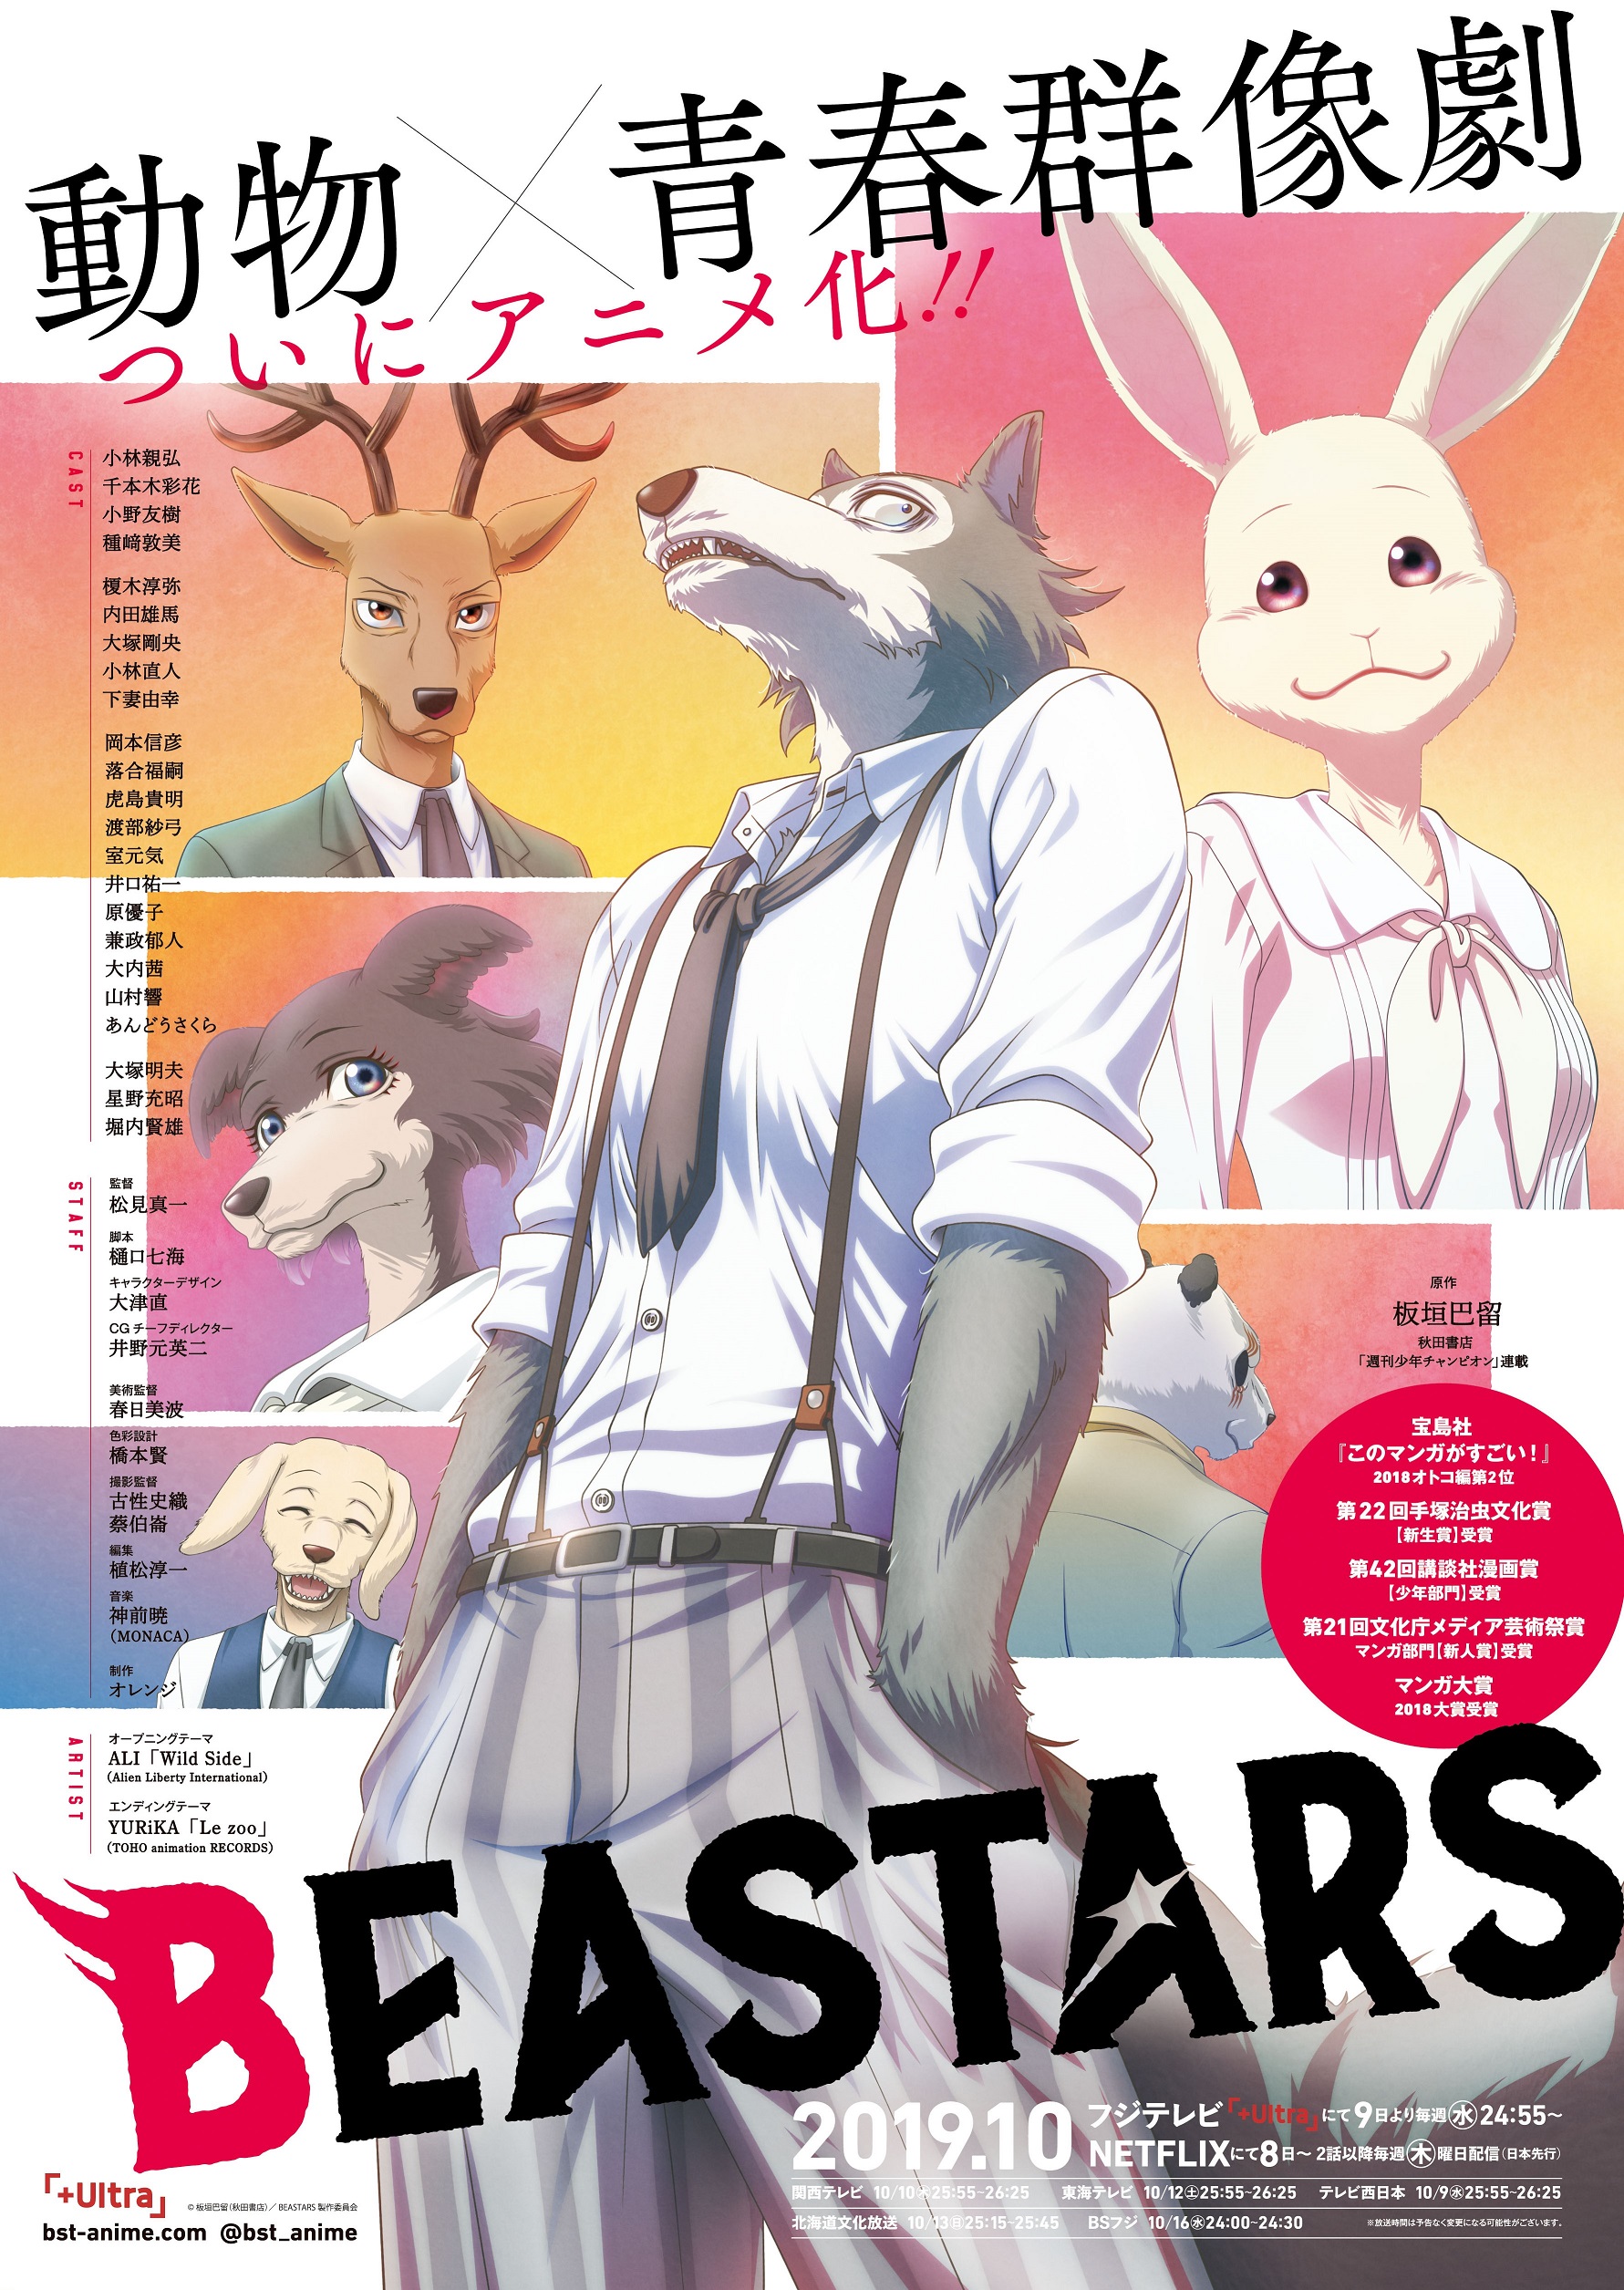 Beastars Anime Opening Theme Wild Side By Ali Releasing On